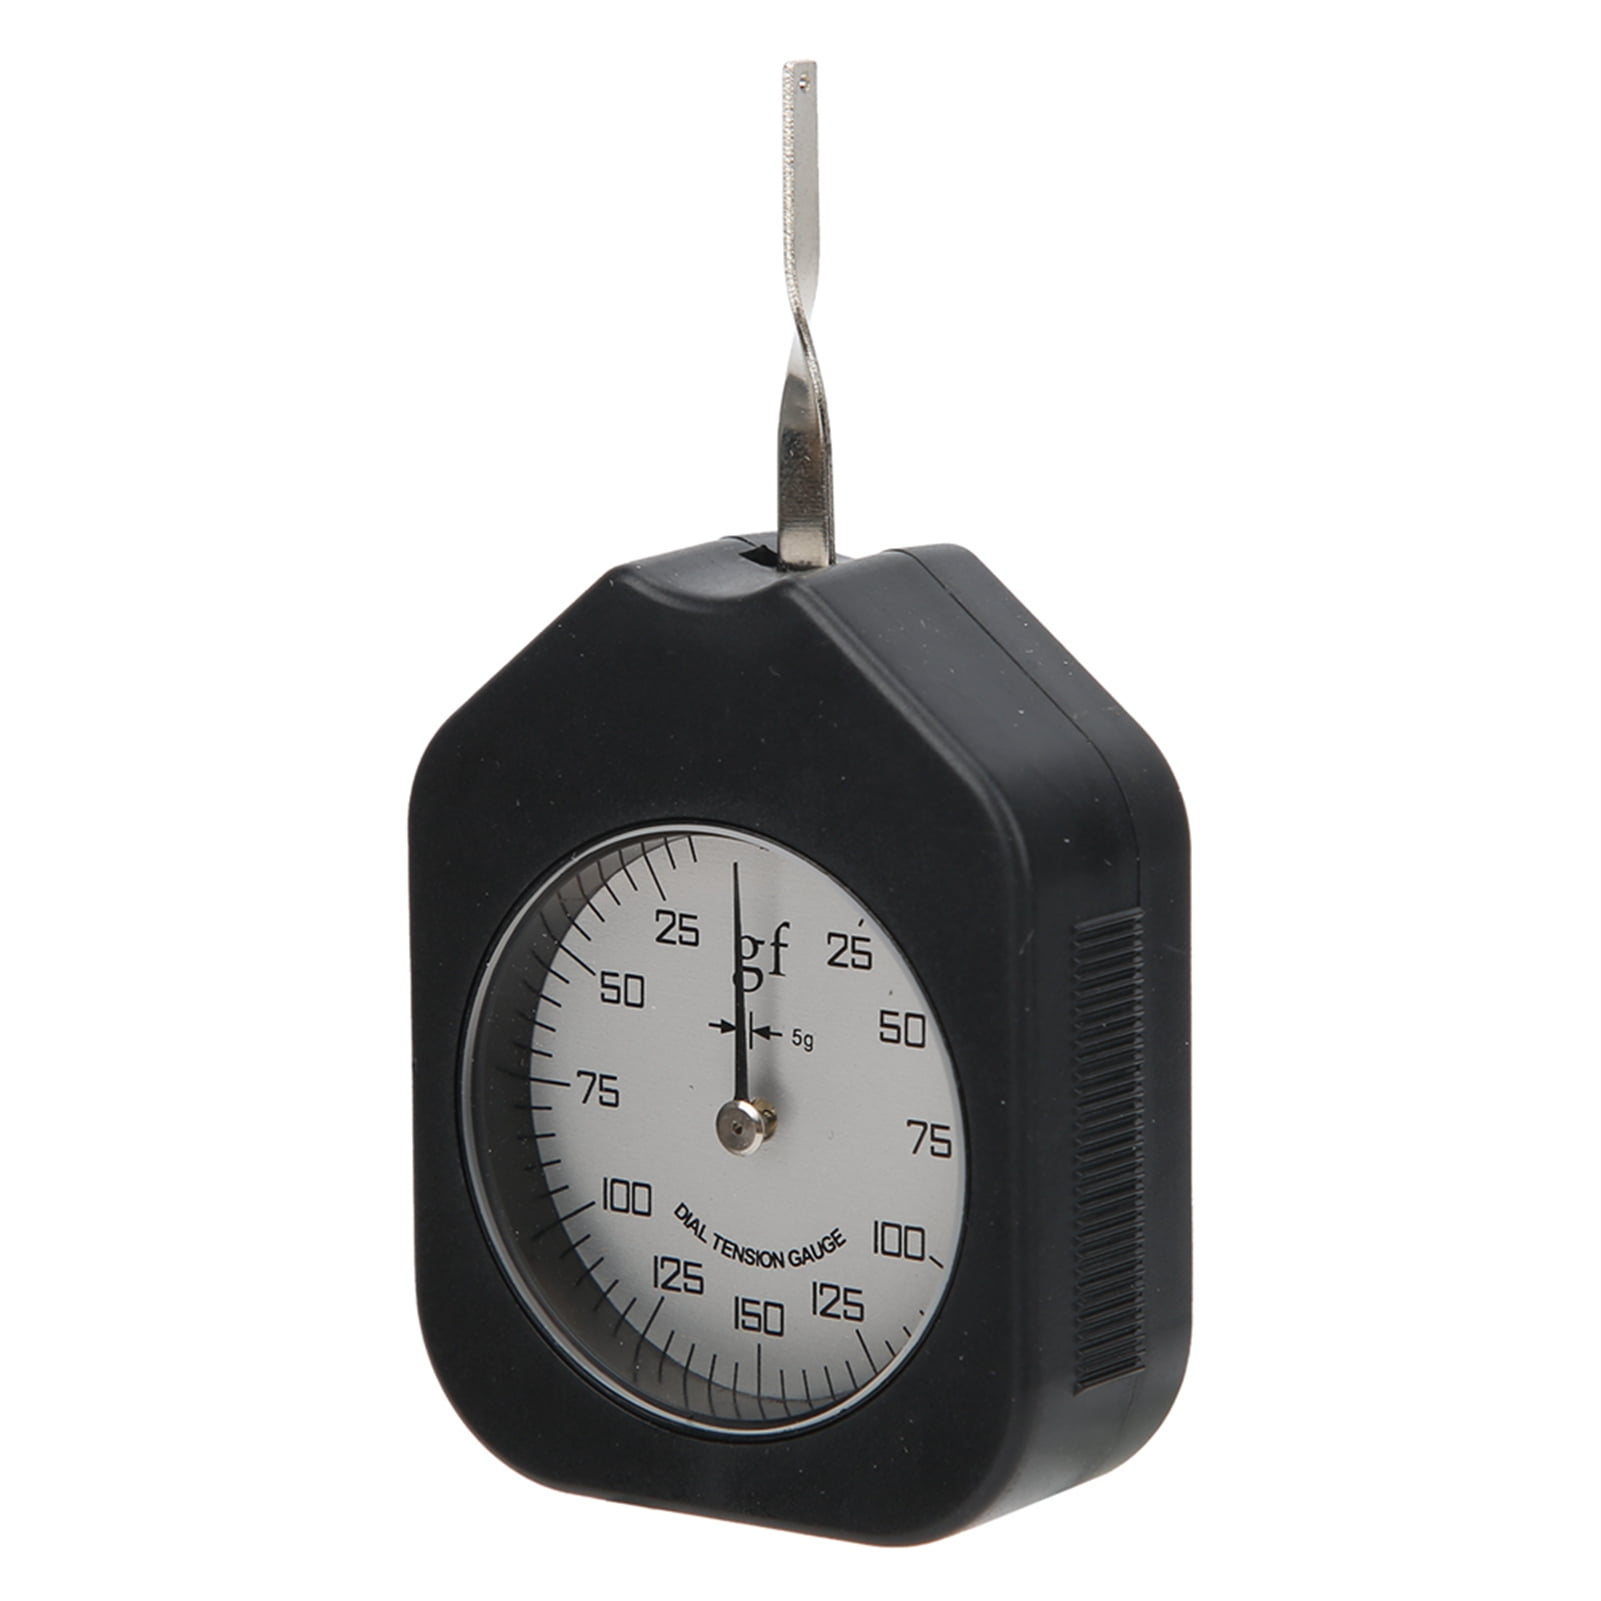 Handheld Tensionmeter Gauge Dial Tension Tester Meter Single Needle Type with Max Tension Measuring Value 150g